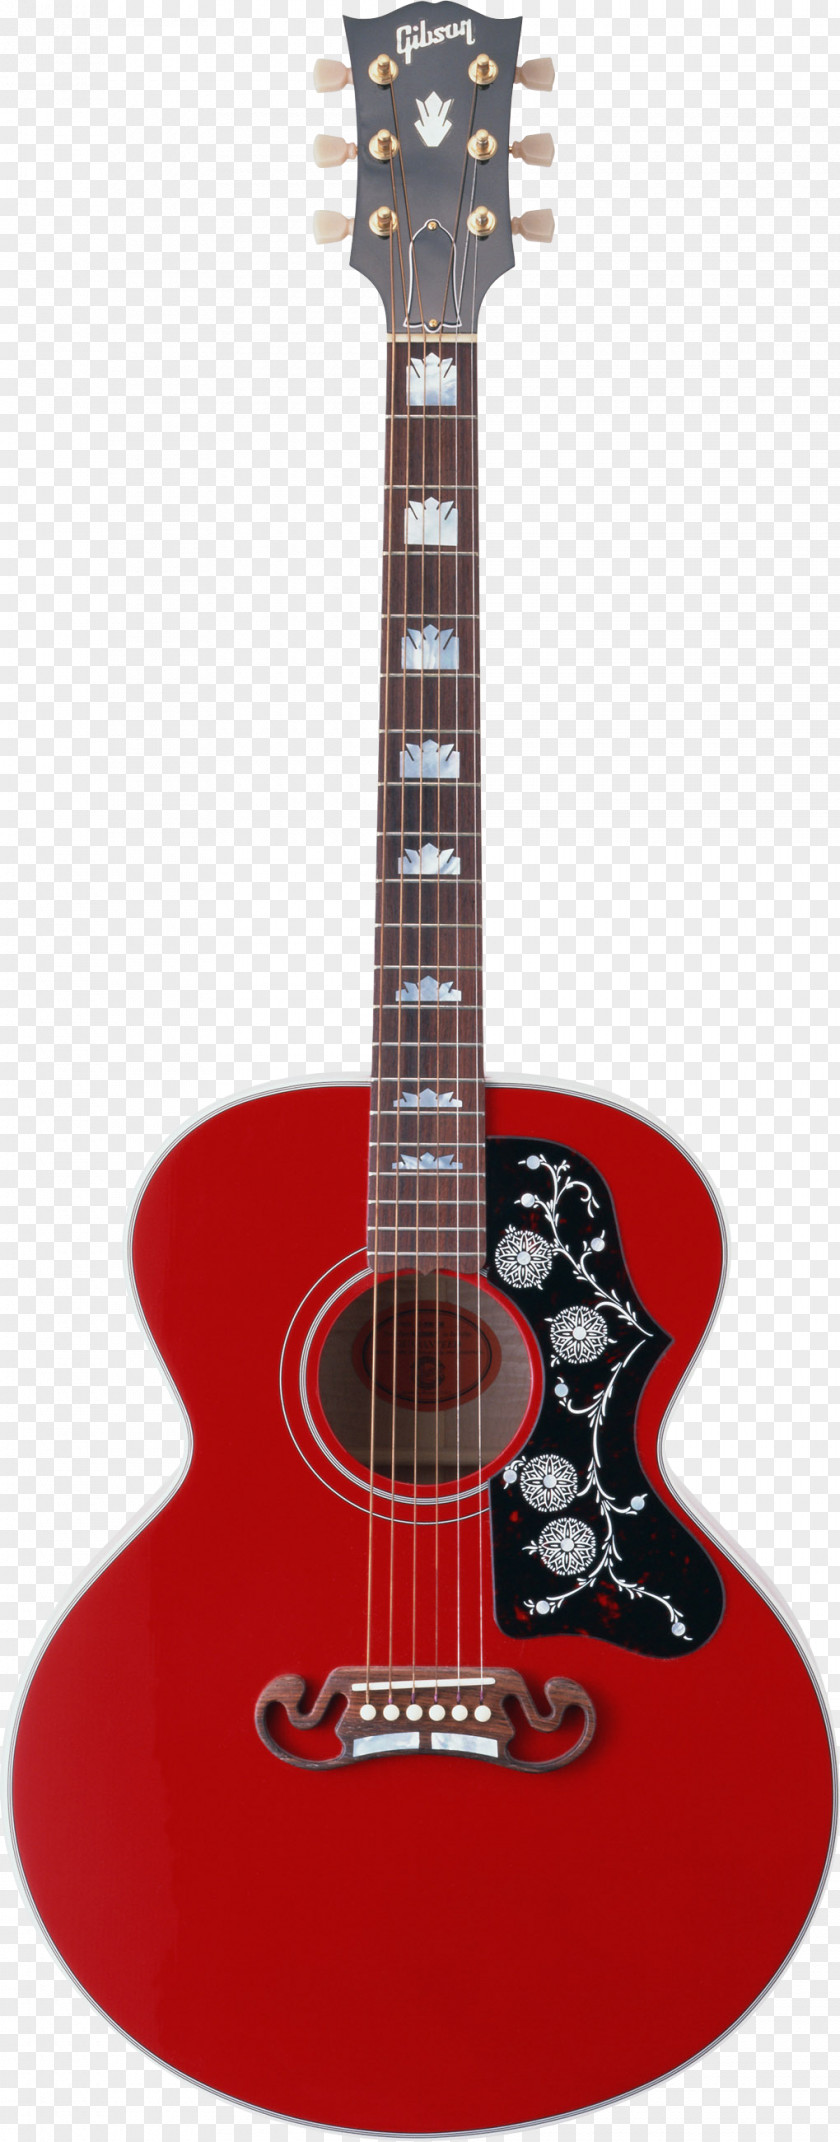 Guitar Image Acoustic Computer File PNG